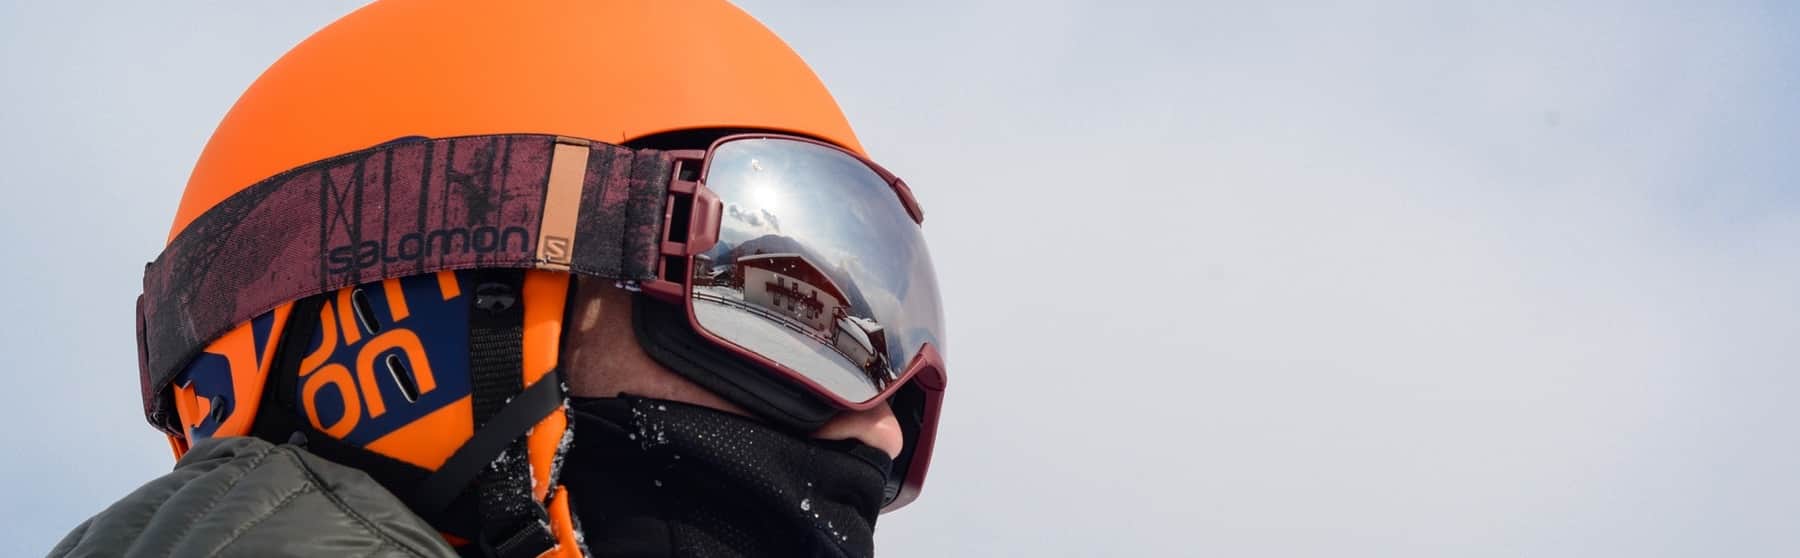 man wearing ski goggles